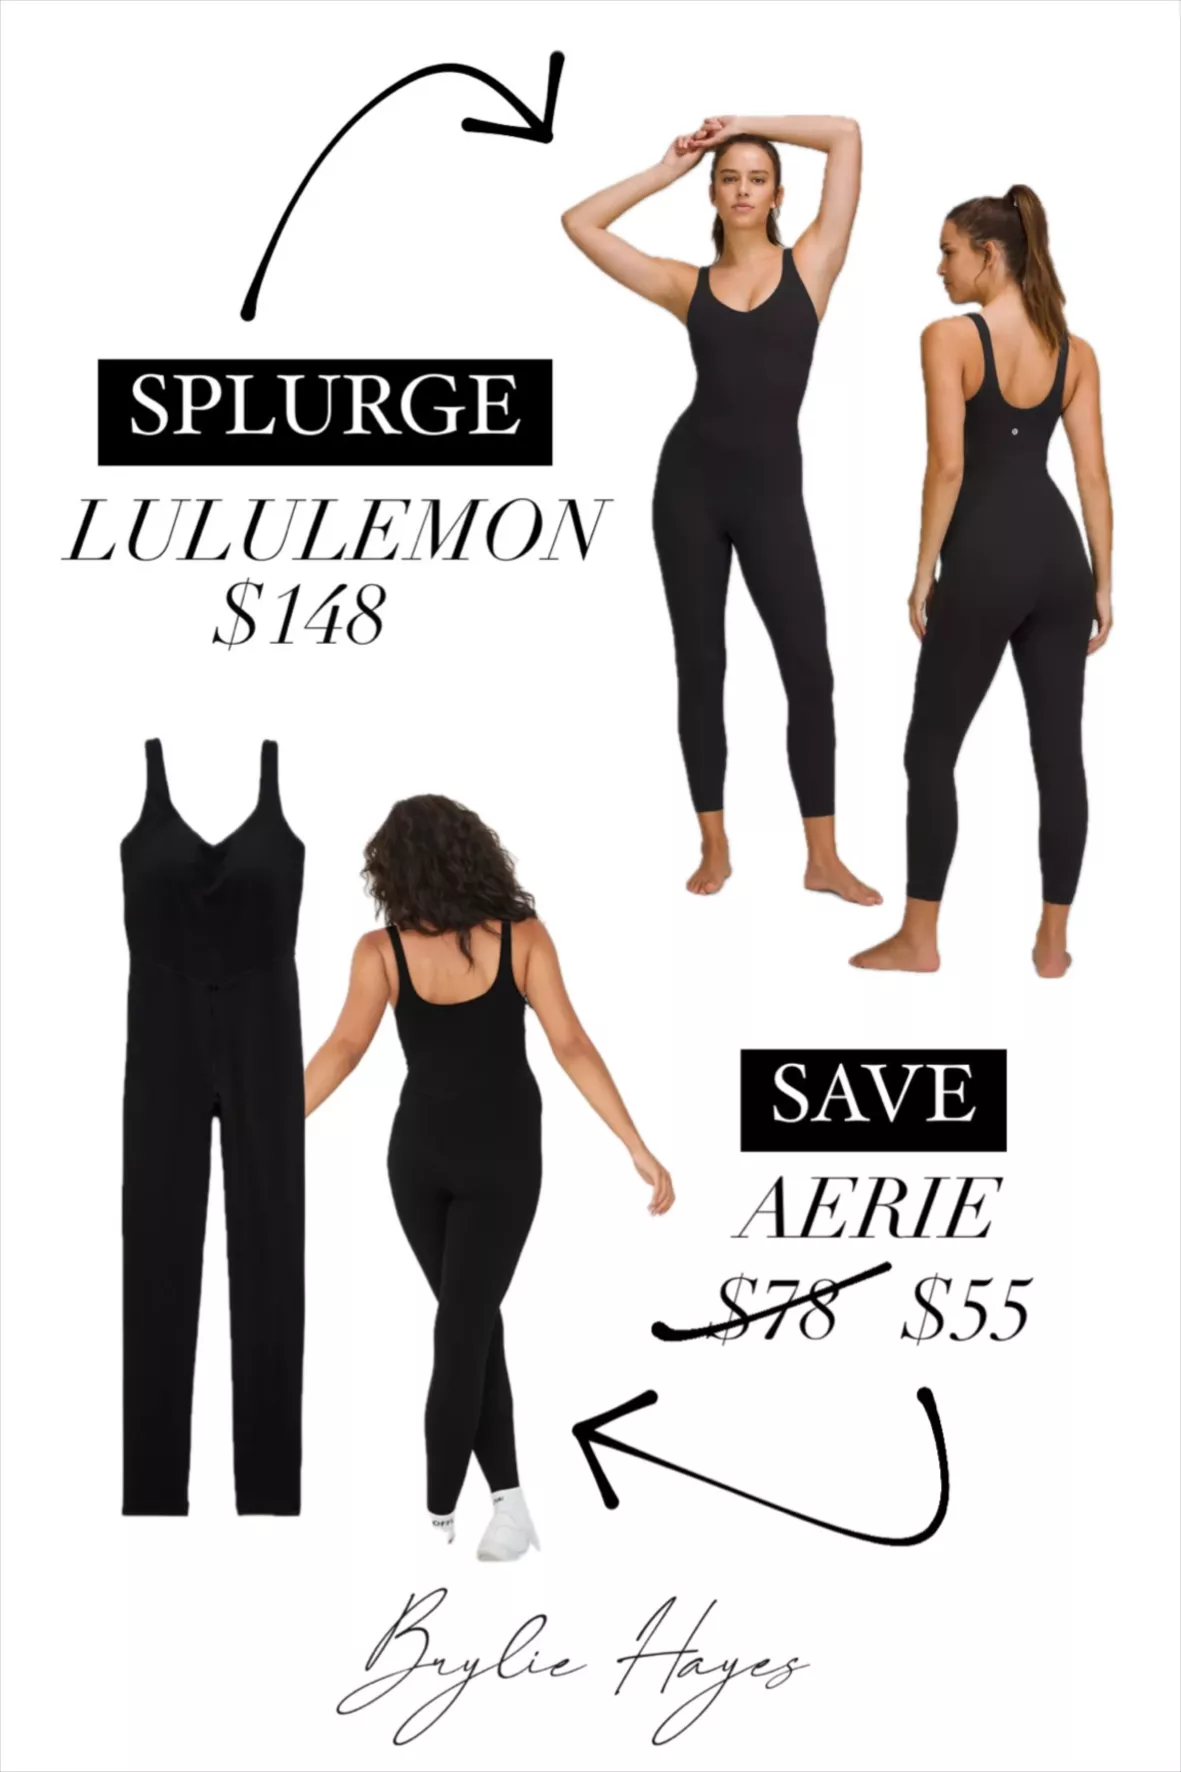 lululemon Align™ Ribbed Bodysuit … curated on LTK  Winter outfits, Fall  winter outfits, Ribbed bodysuit